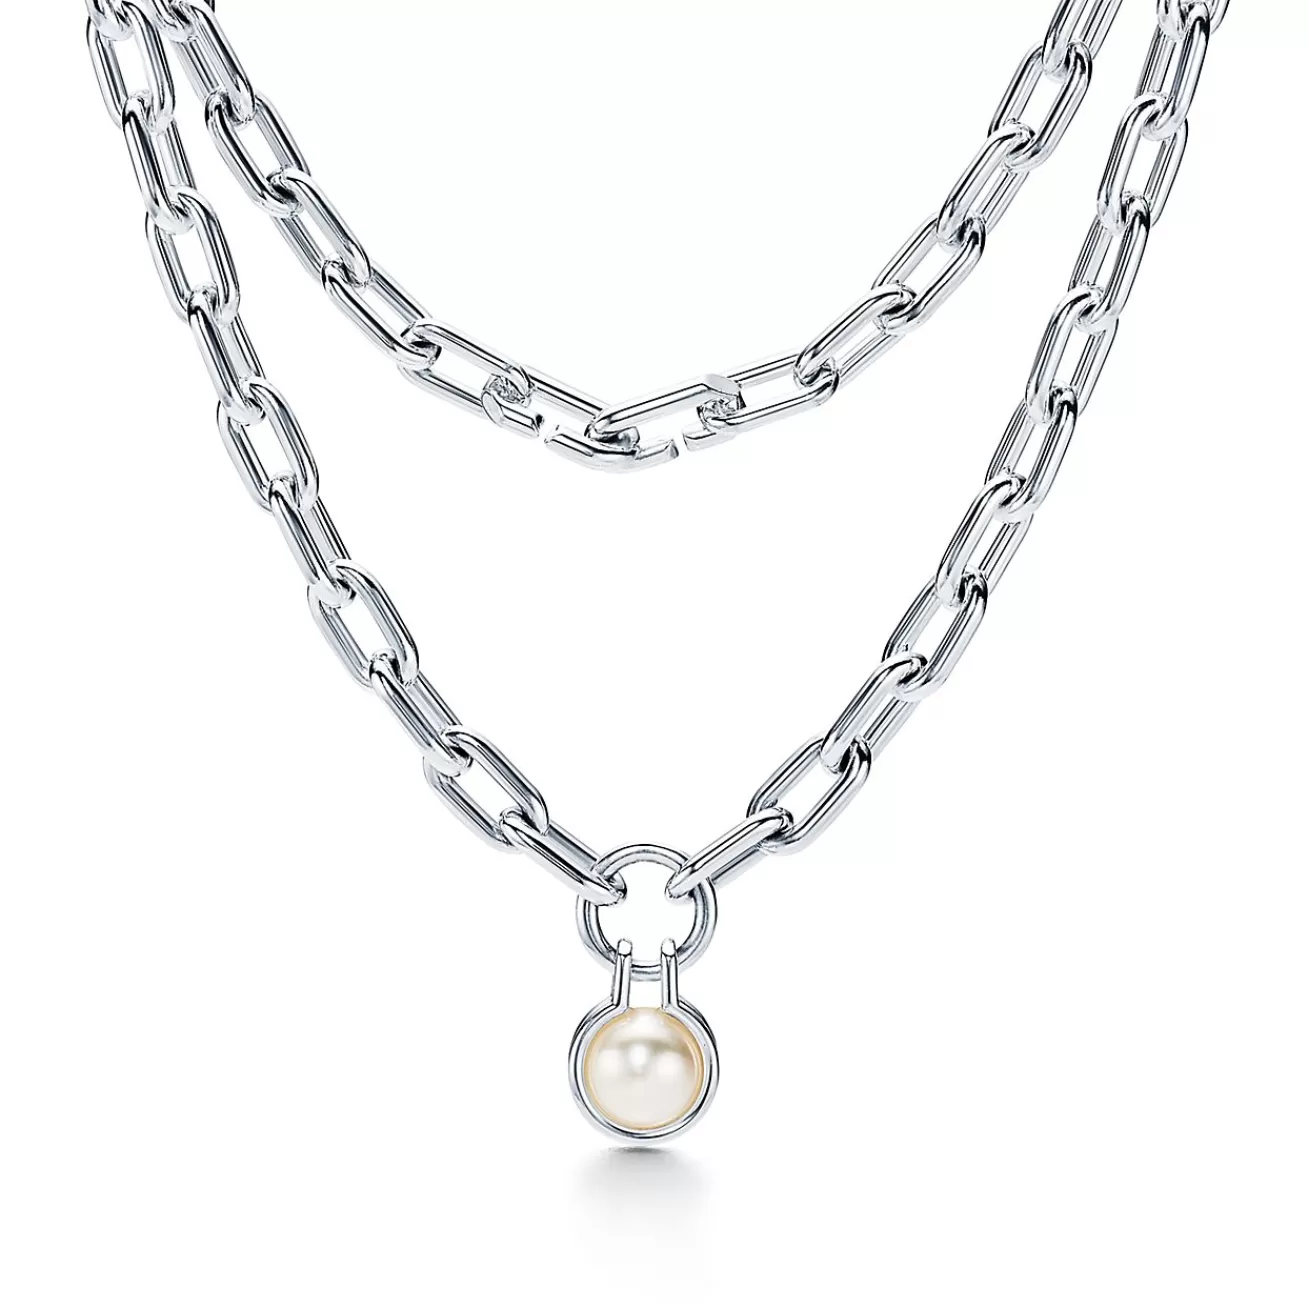 Tiffany & Co. Tiffany HardWear freshwater pearl necklace in sterling silver. | ^ Necklaces & Pendants | Men's Jewelry